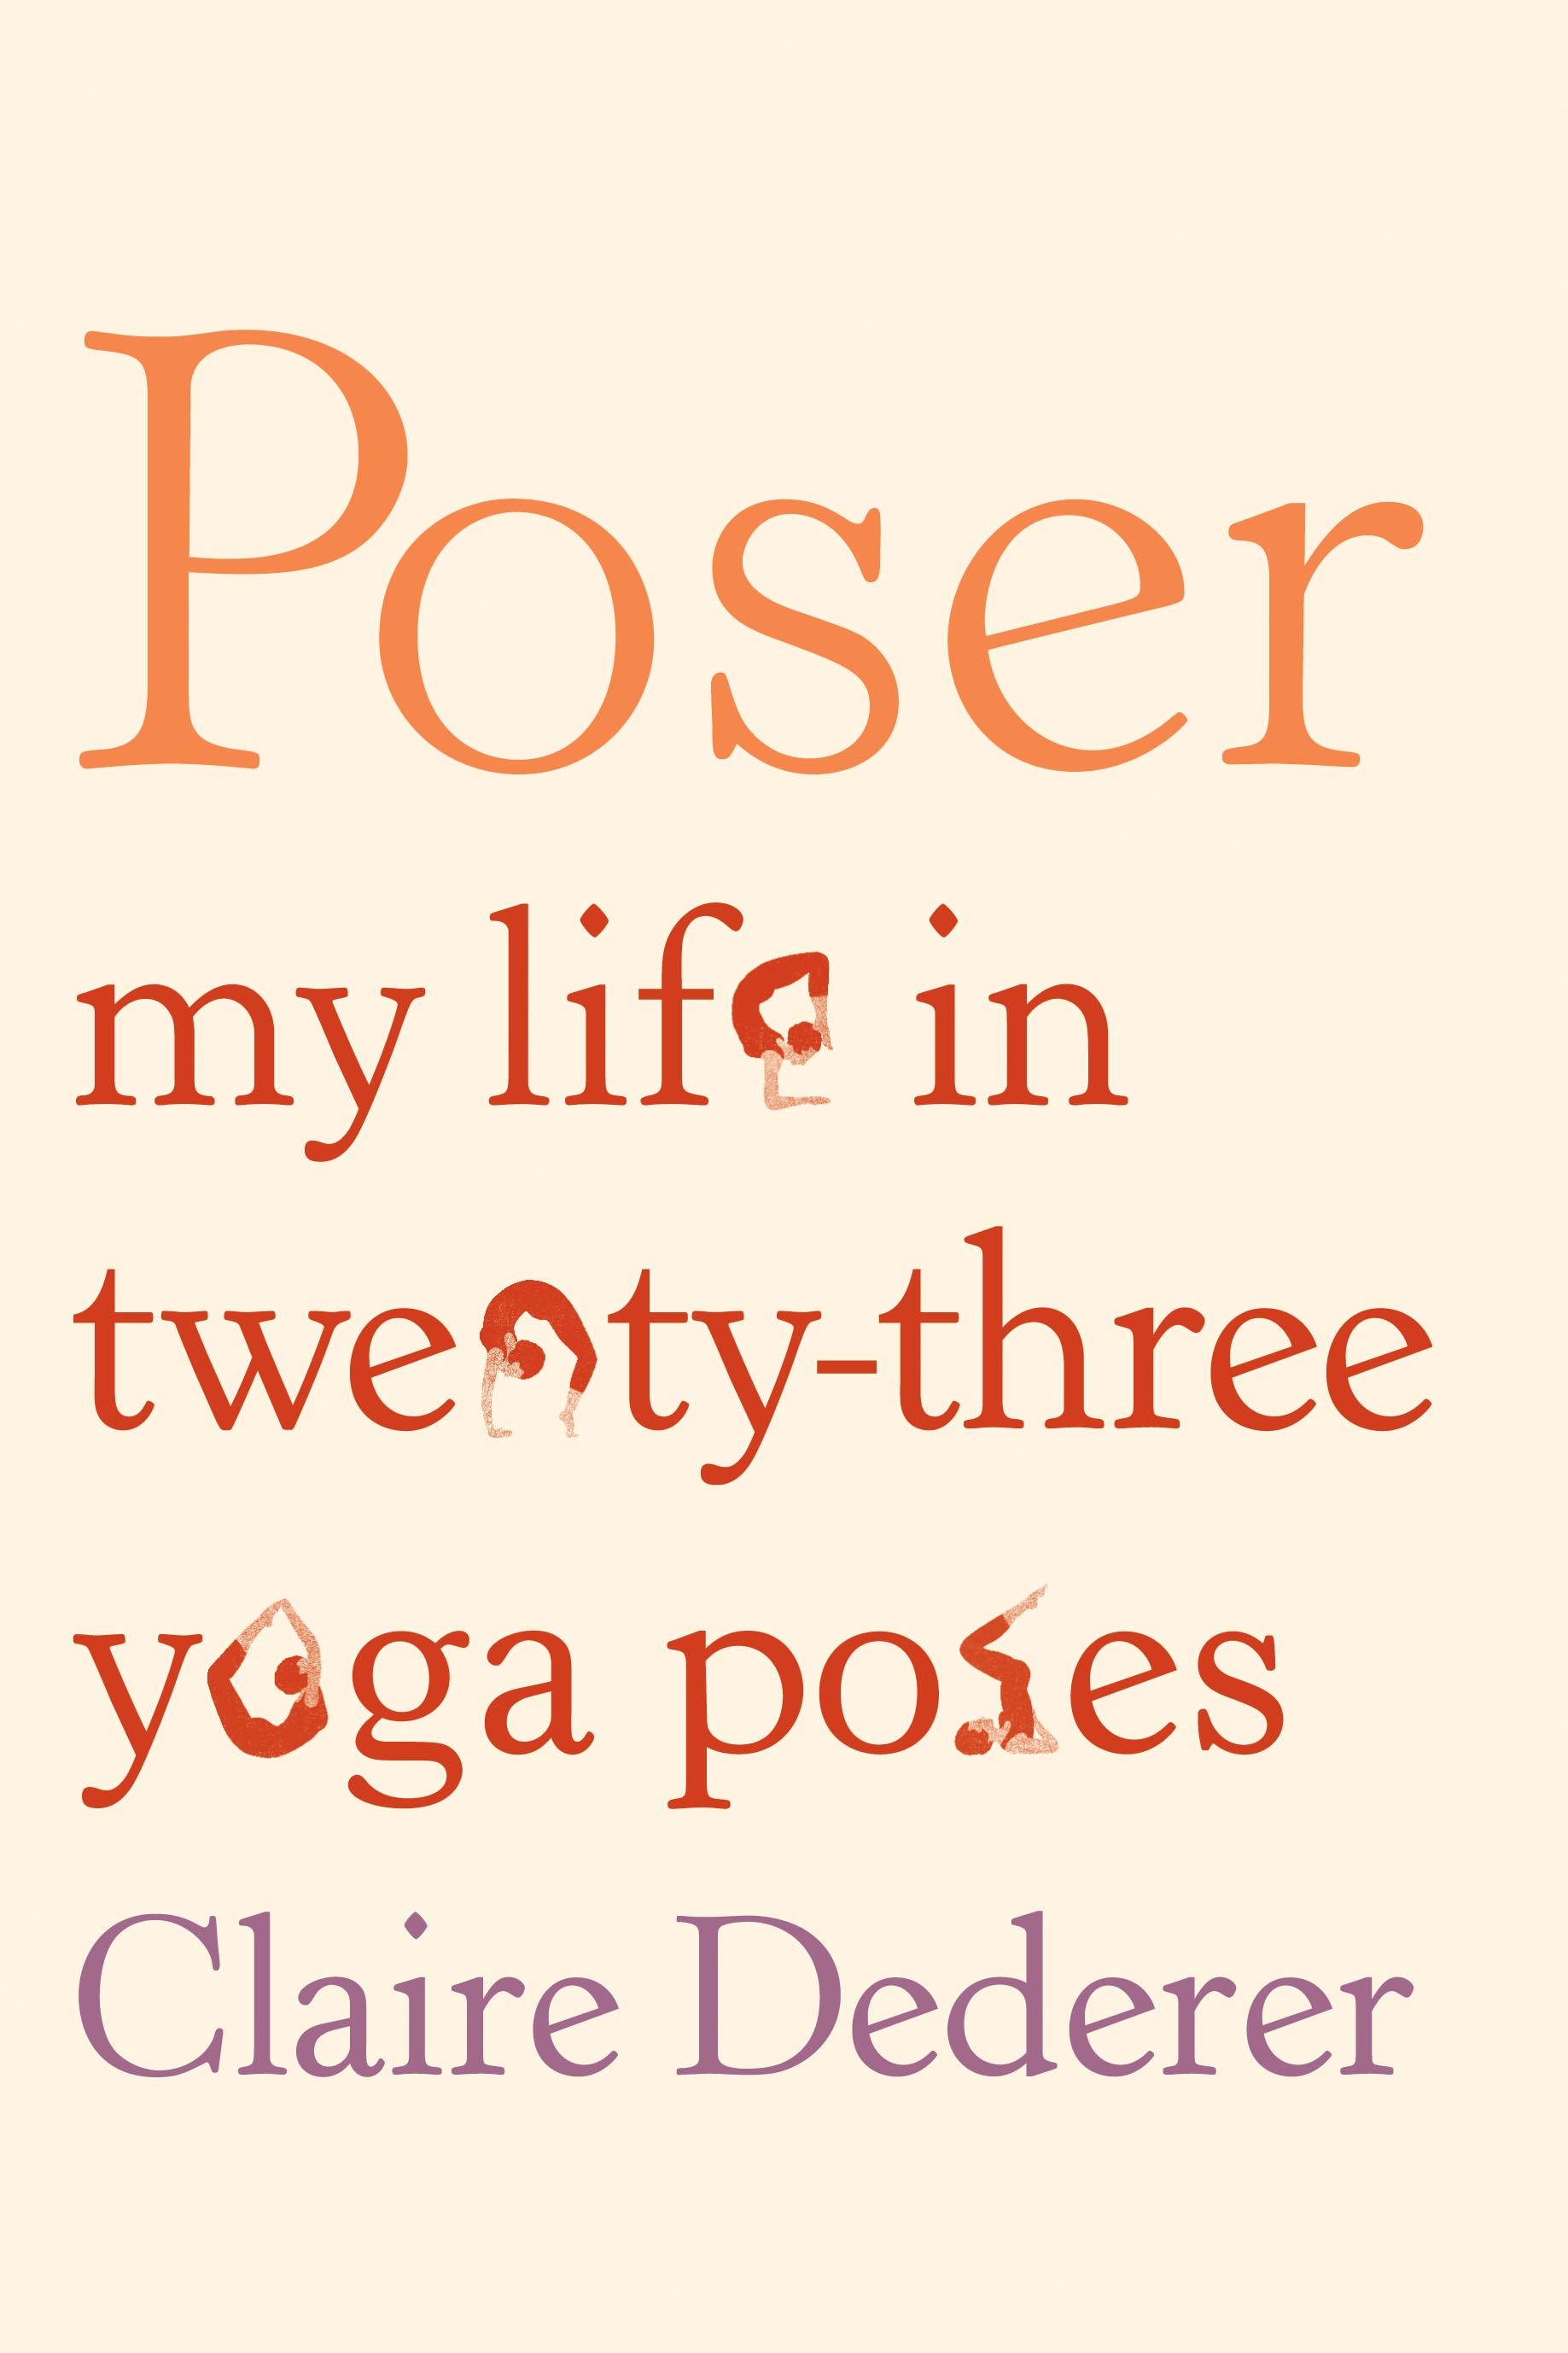 pose Yoga Zohn and CultureZohn: My Twenty picture Life in Patricia Poses Poser,  Three yoga name